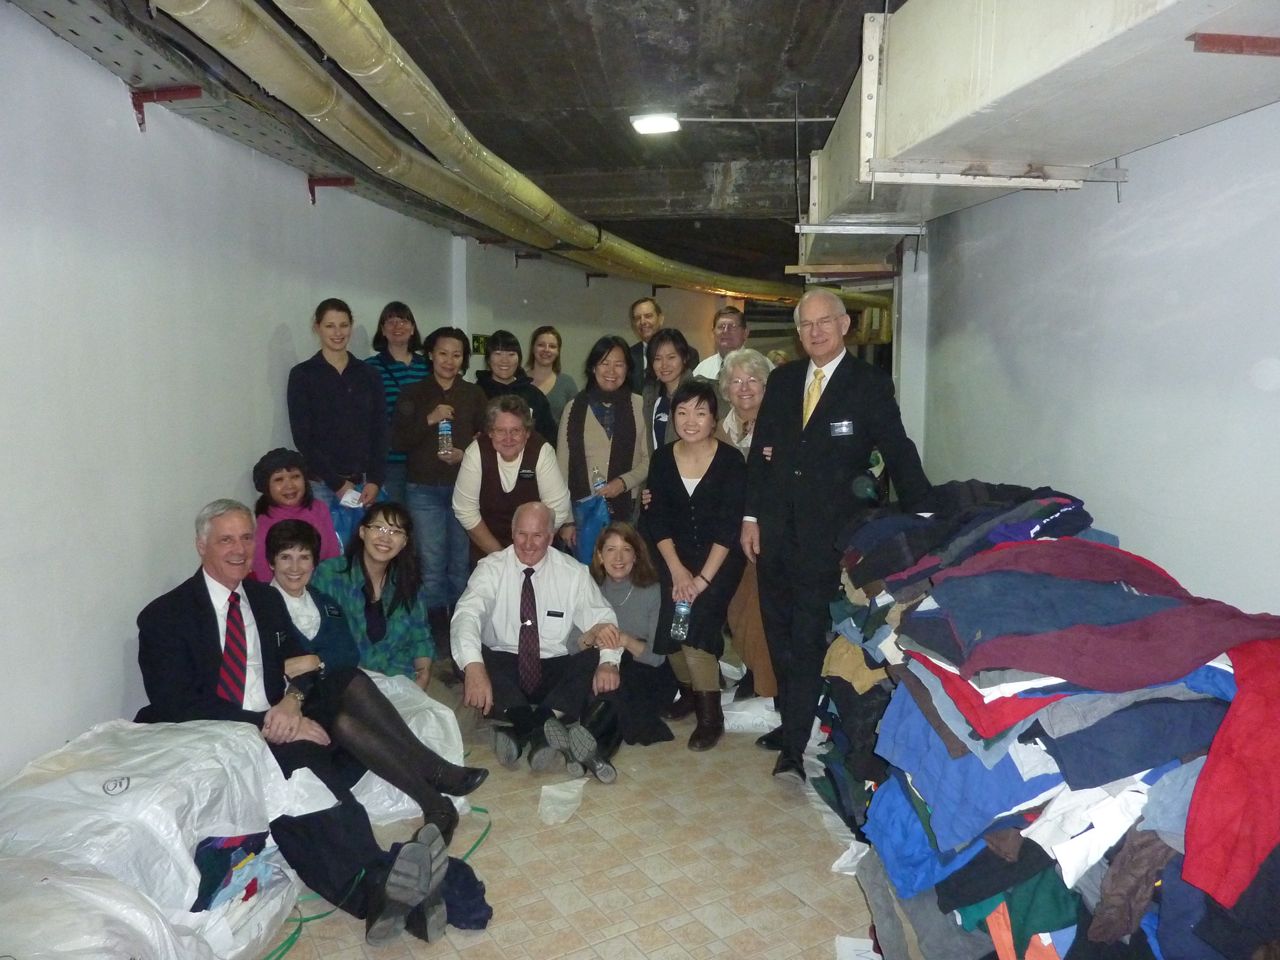 Making Memories in Mongolia The LDS Church Humanitarian